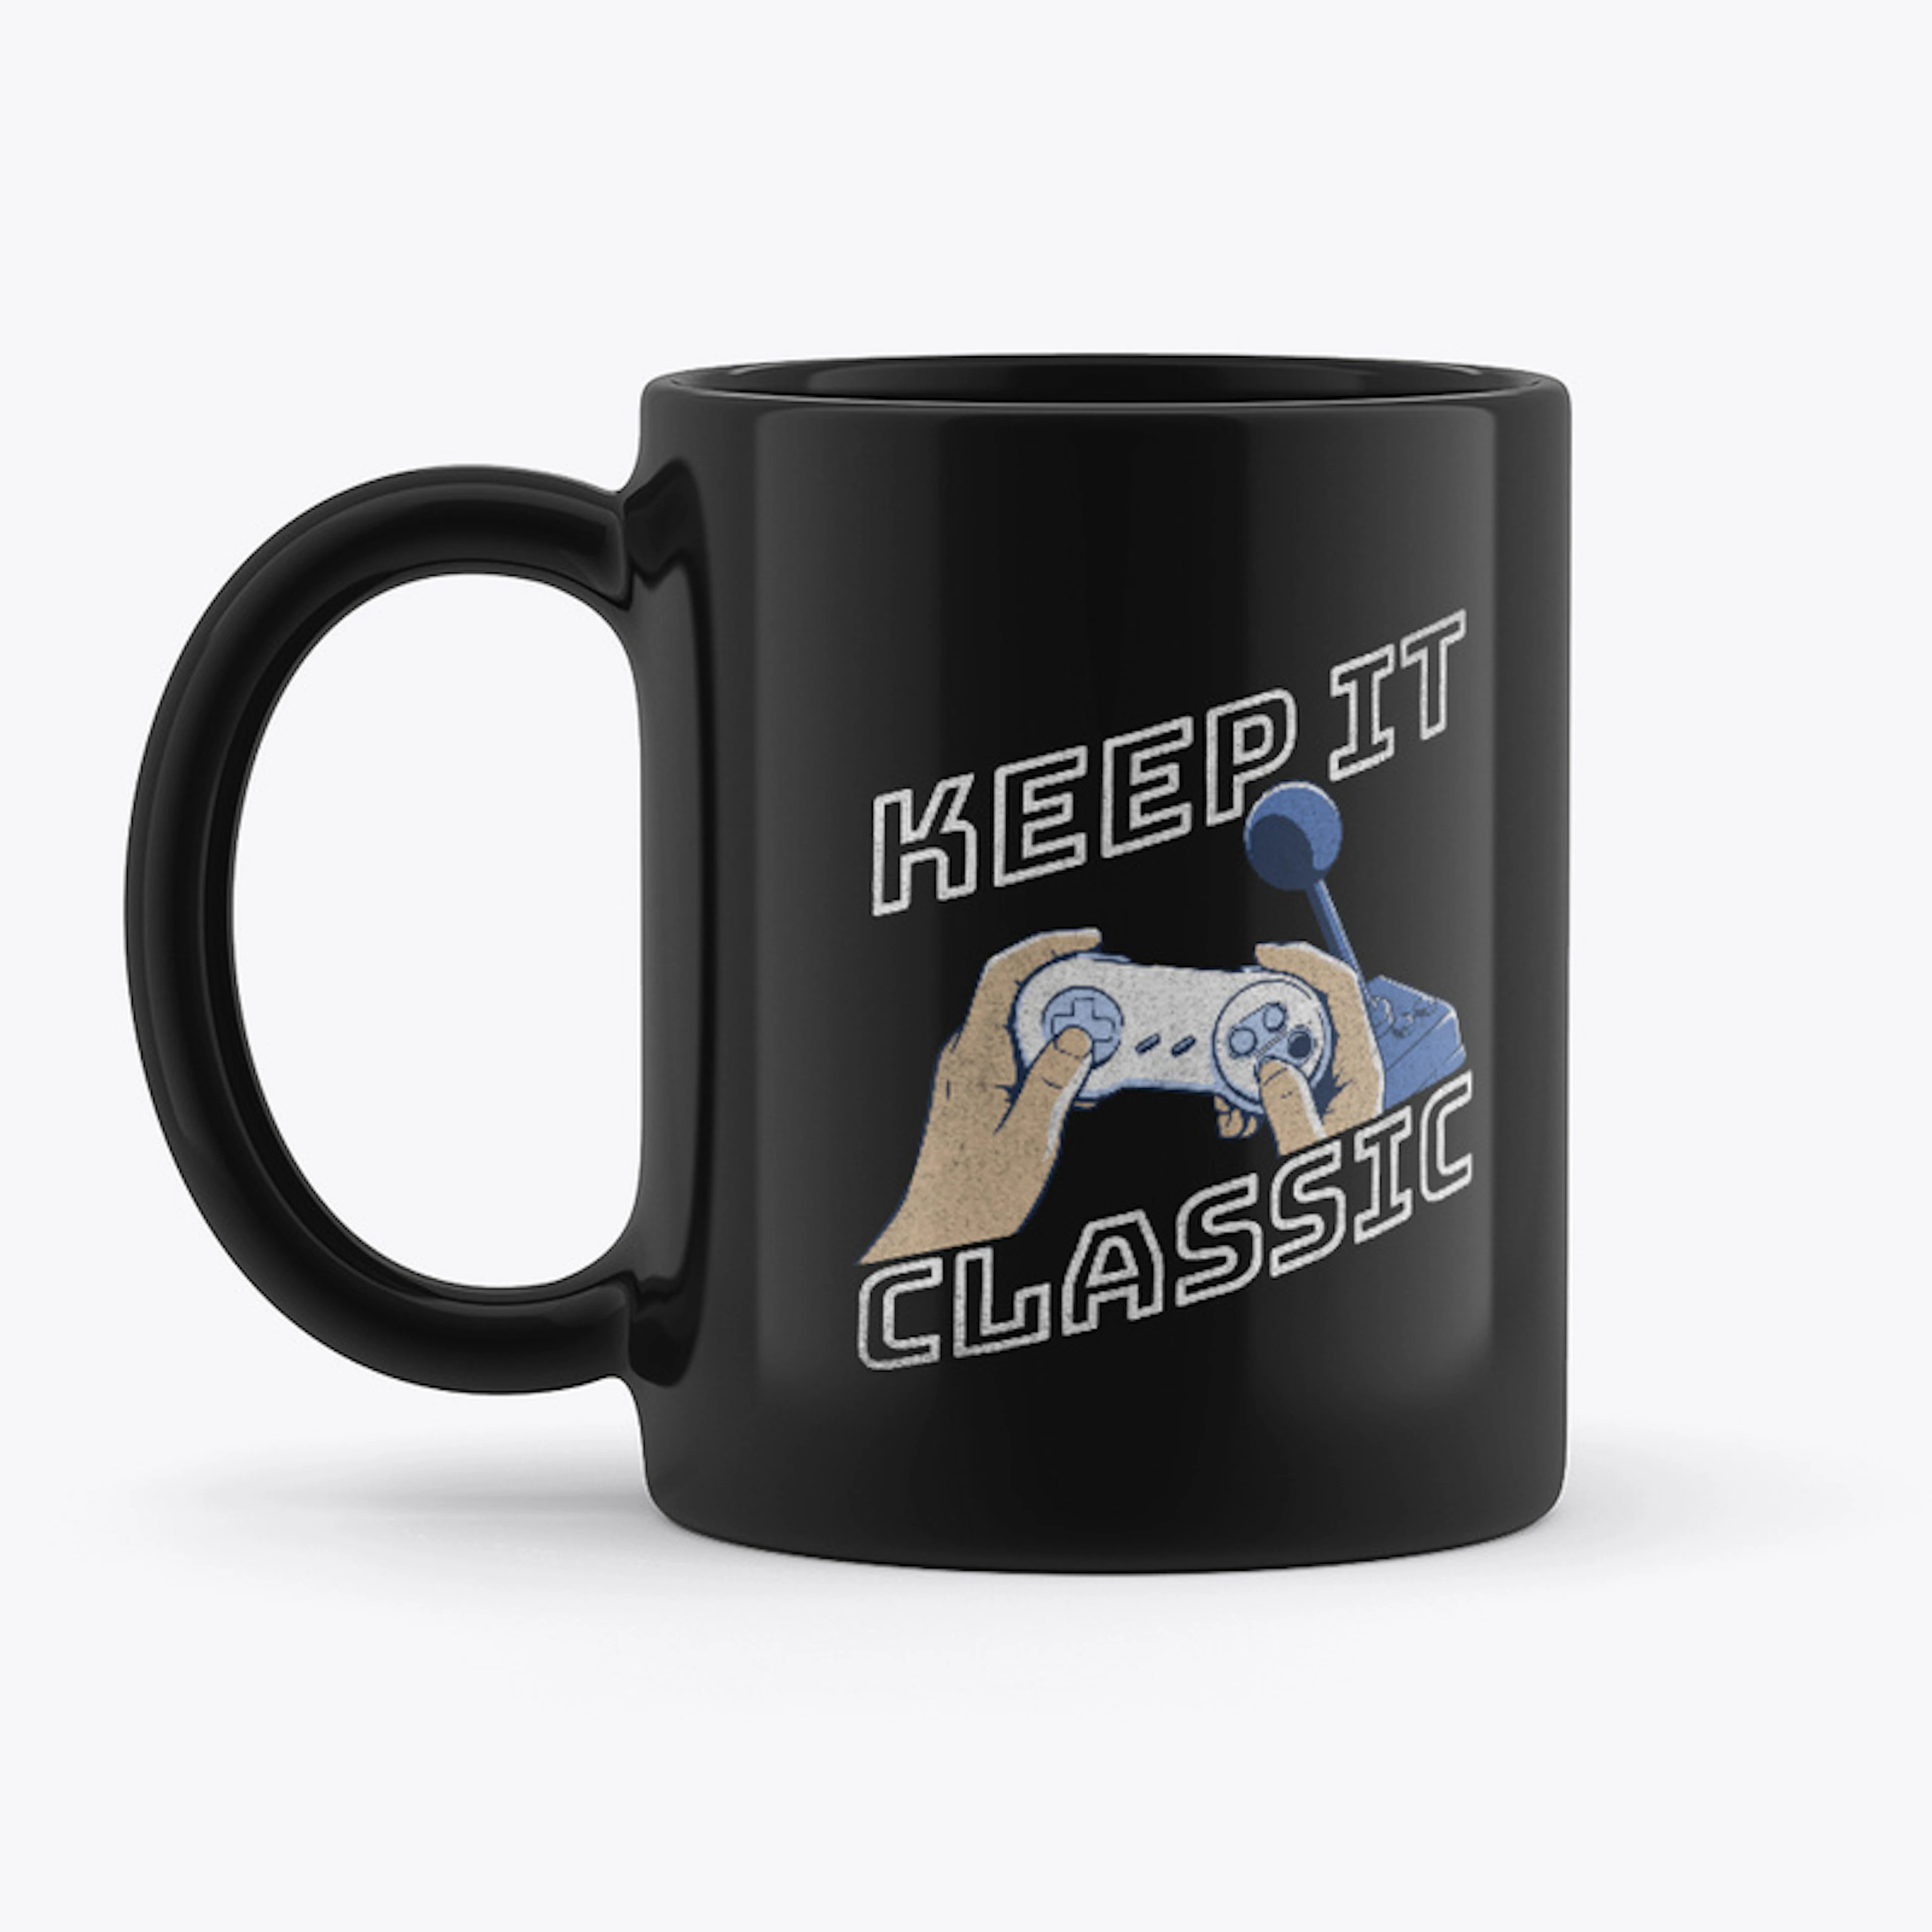 Keep It Classic Coffee Cup